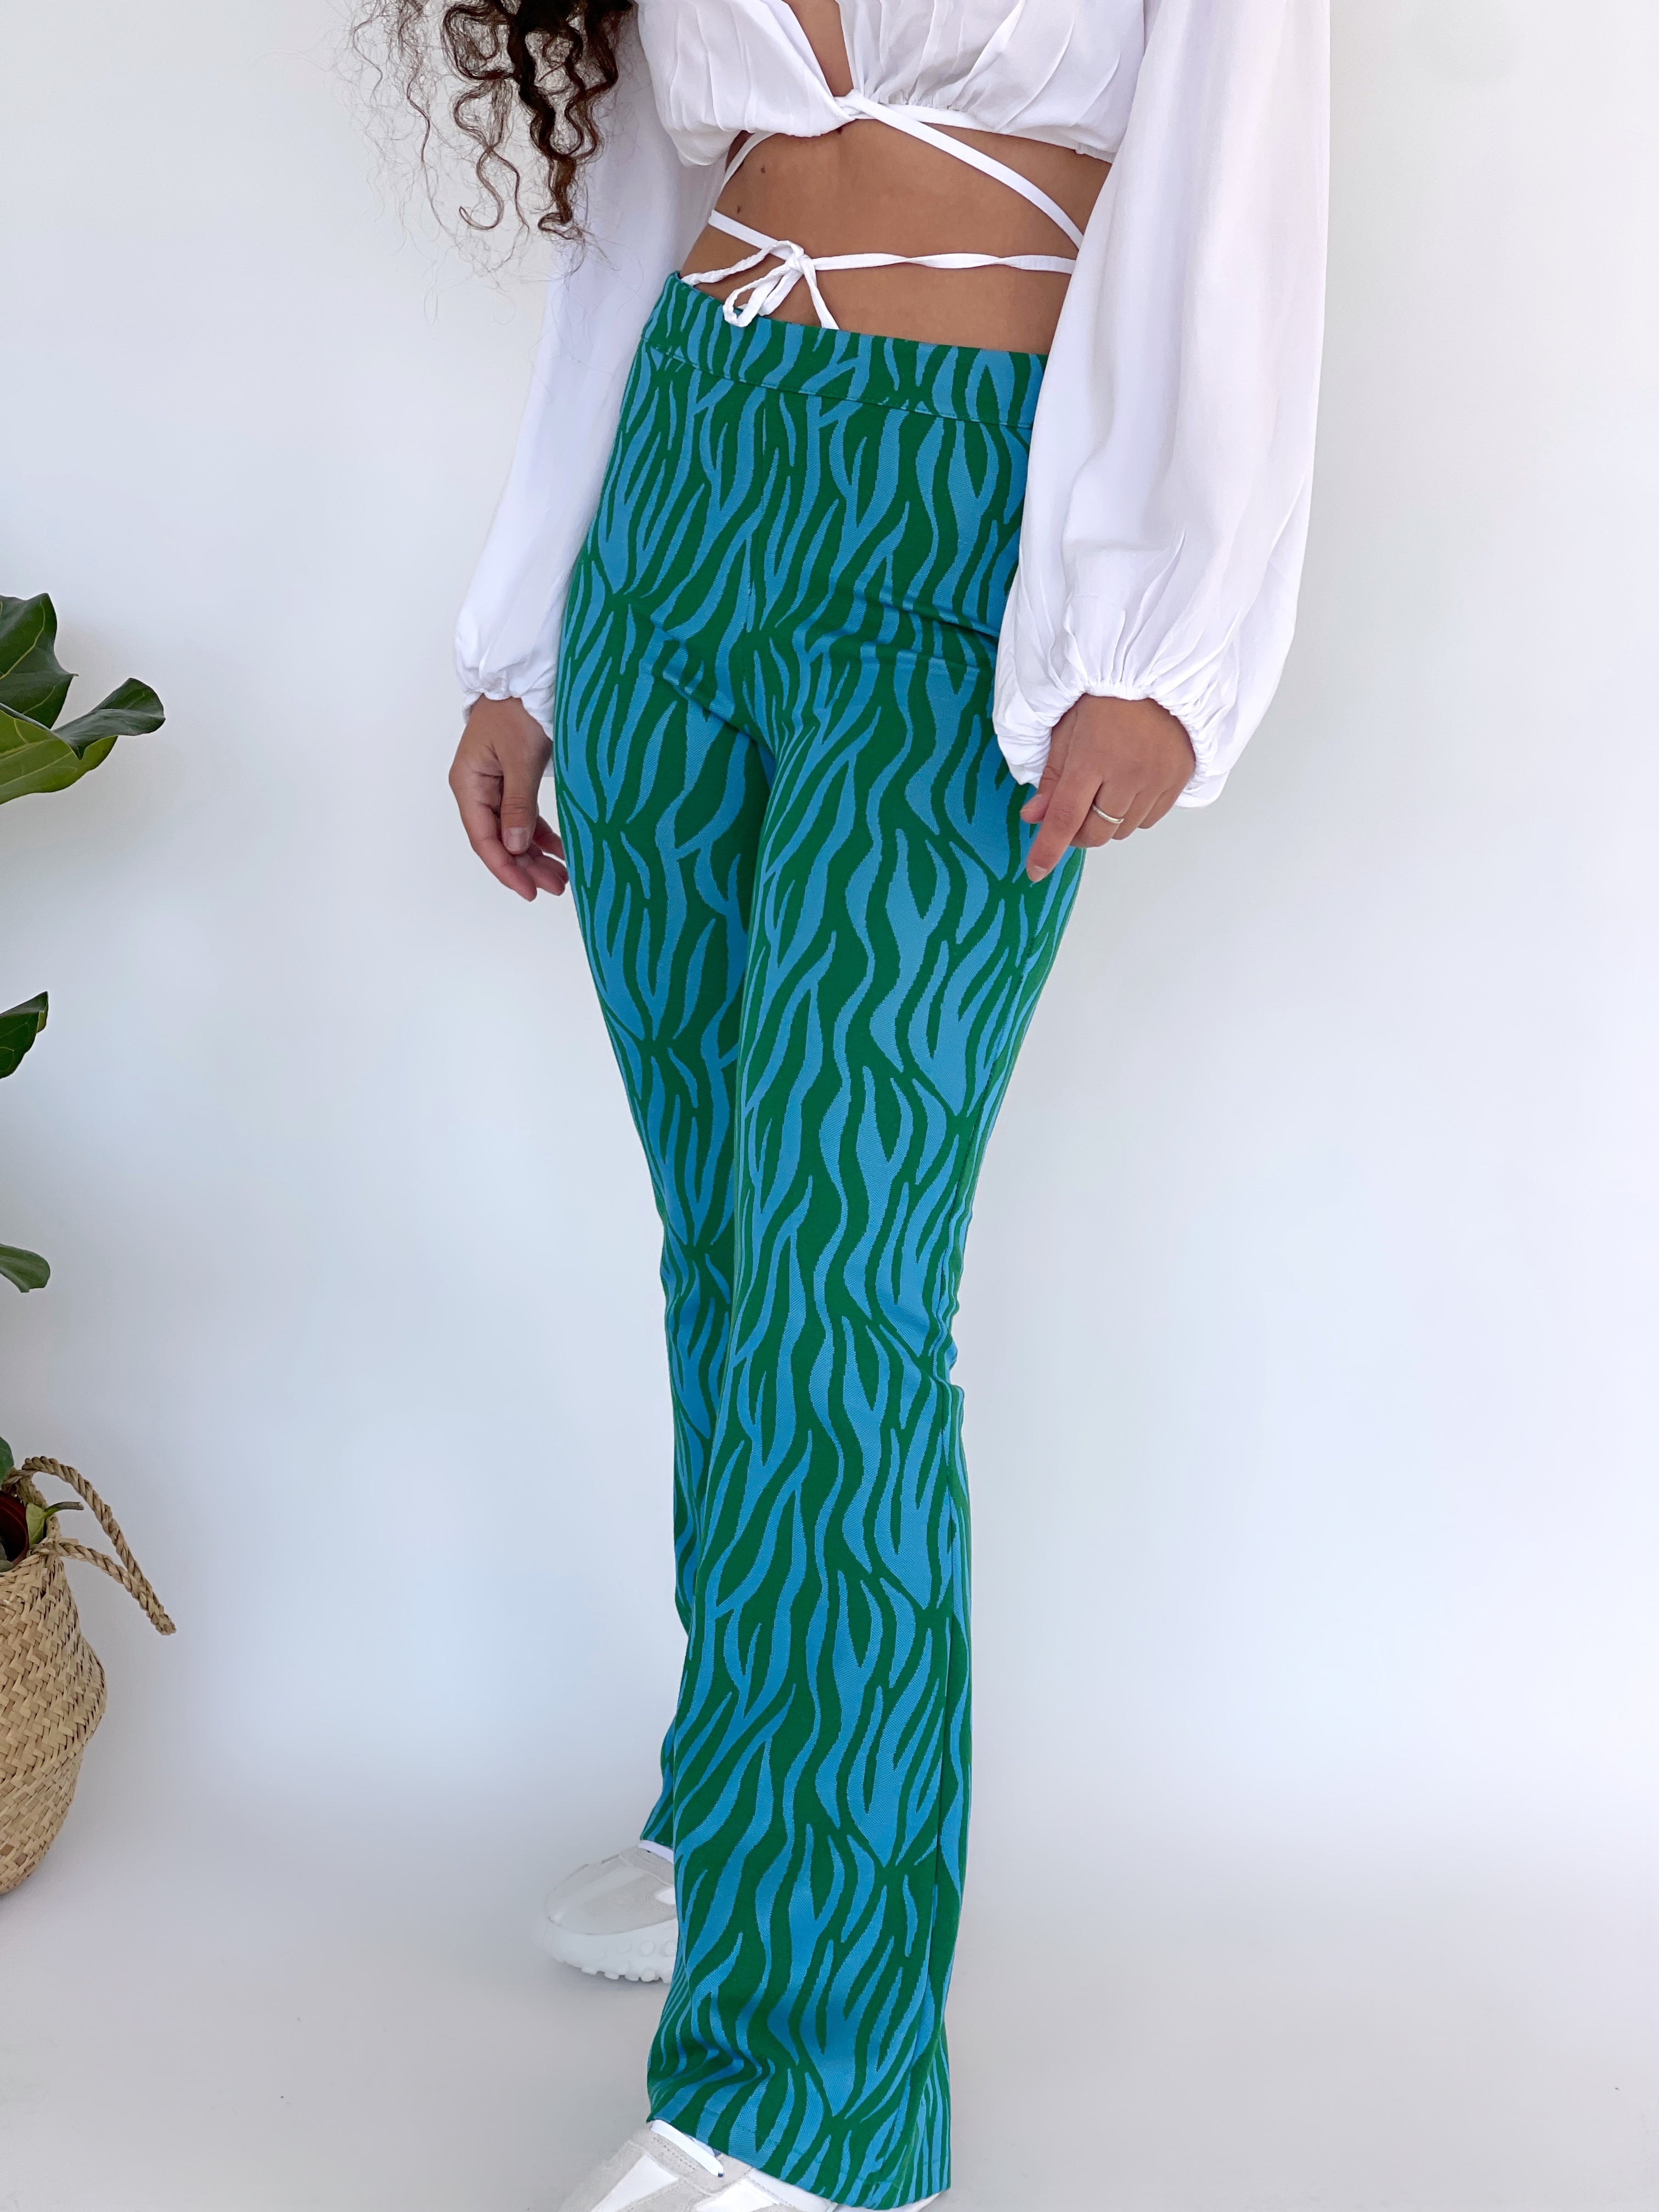 ZEBRA PRINT FLARE TROUSERS IN LIGHT BLUE & GREEN - Trousers - LE TRÉ